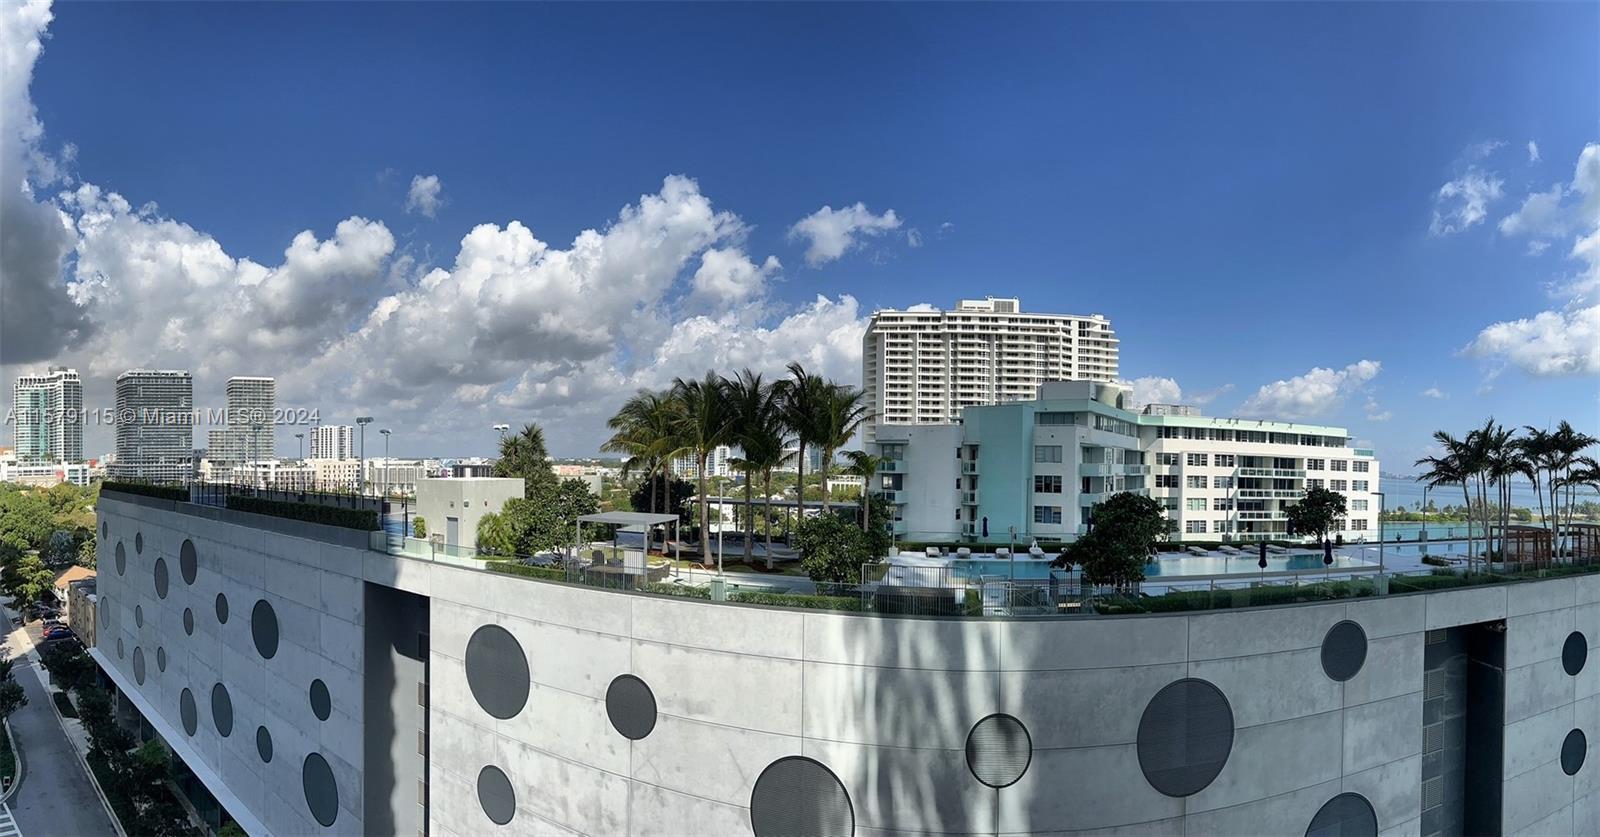 Photo of 650 NE 32nd St #1008 in Miami, FL